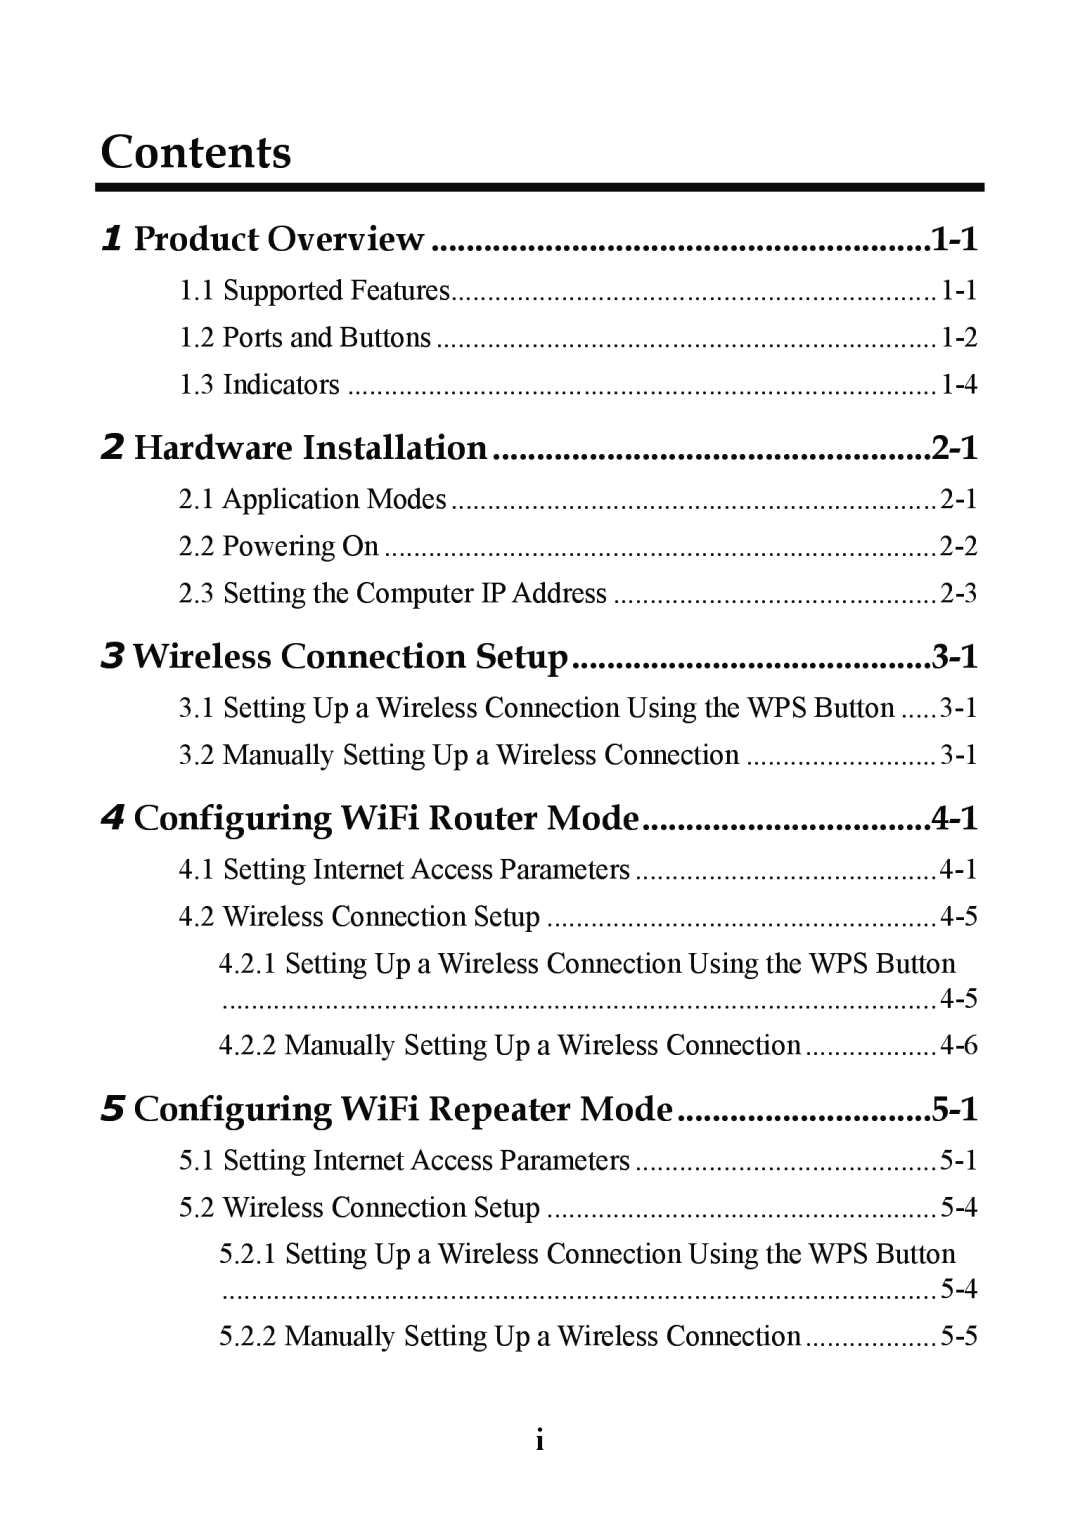 Huawei WS322 manual Contents 